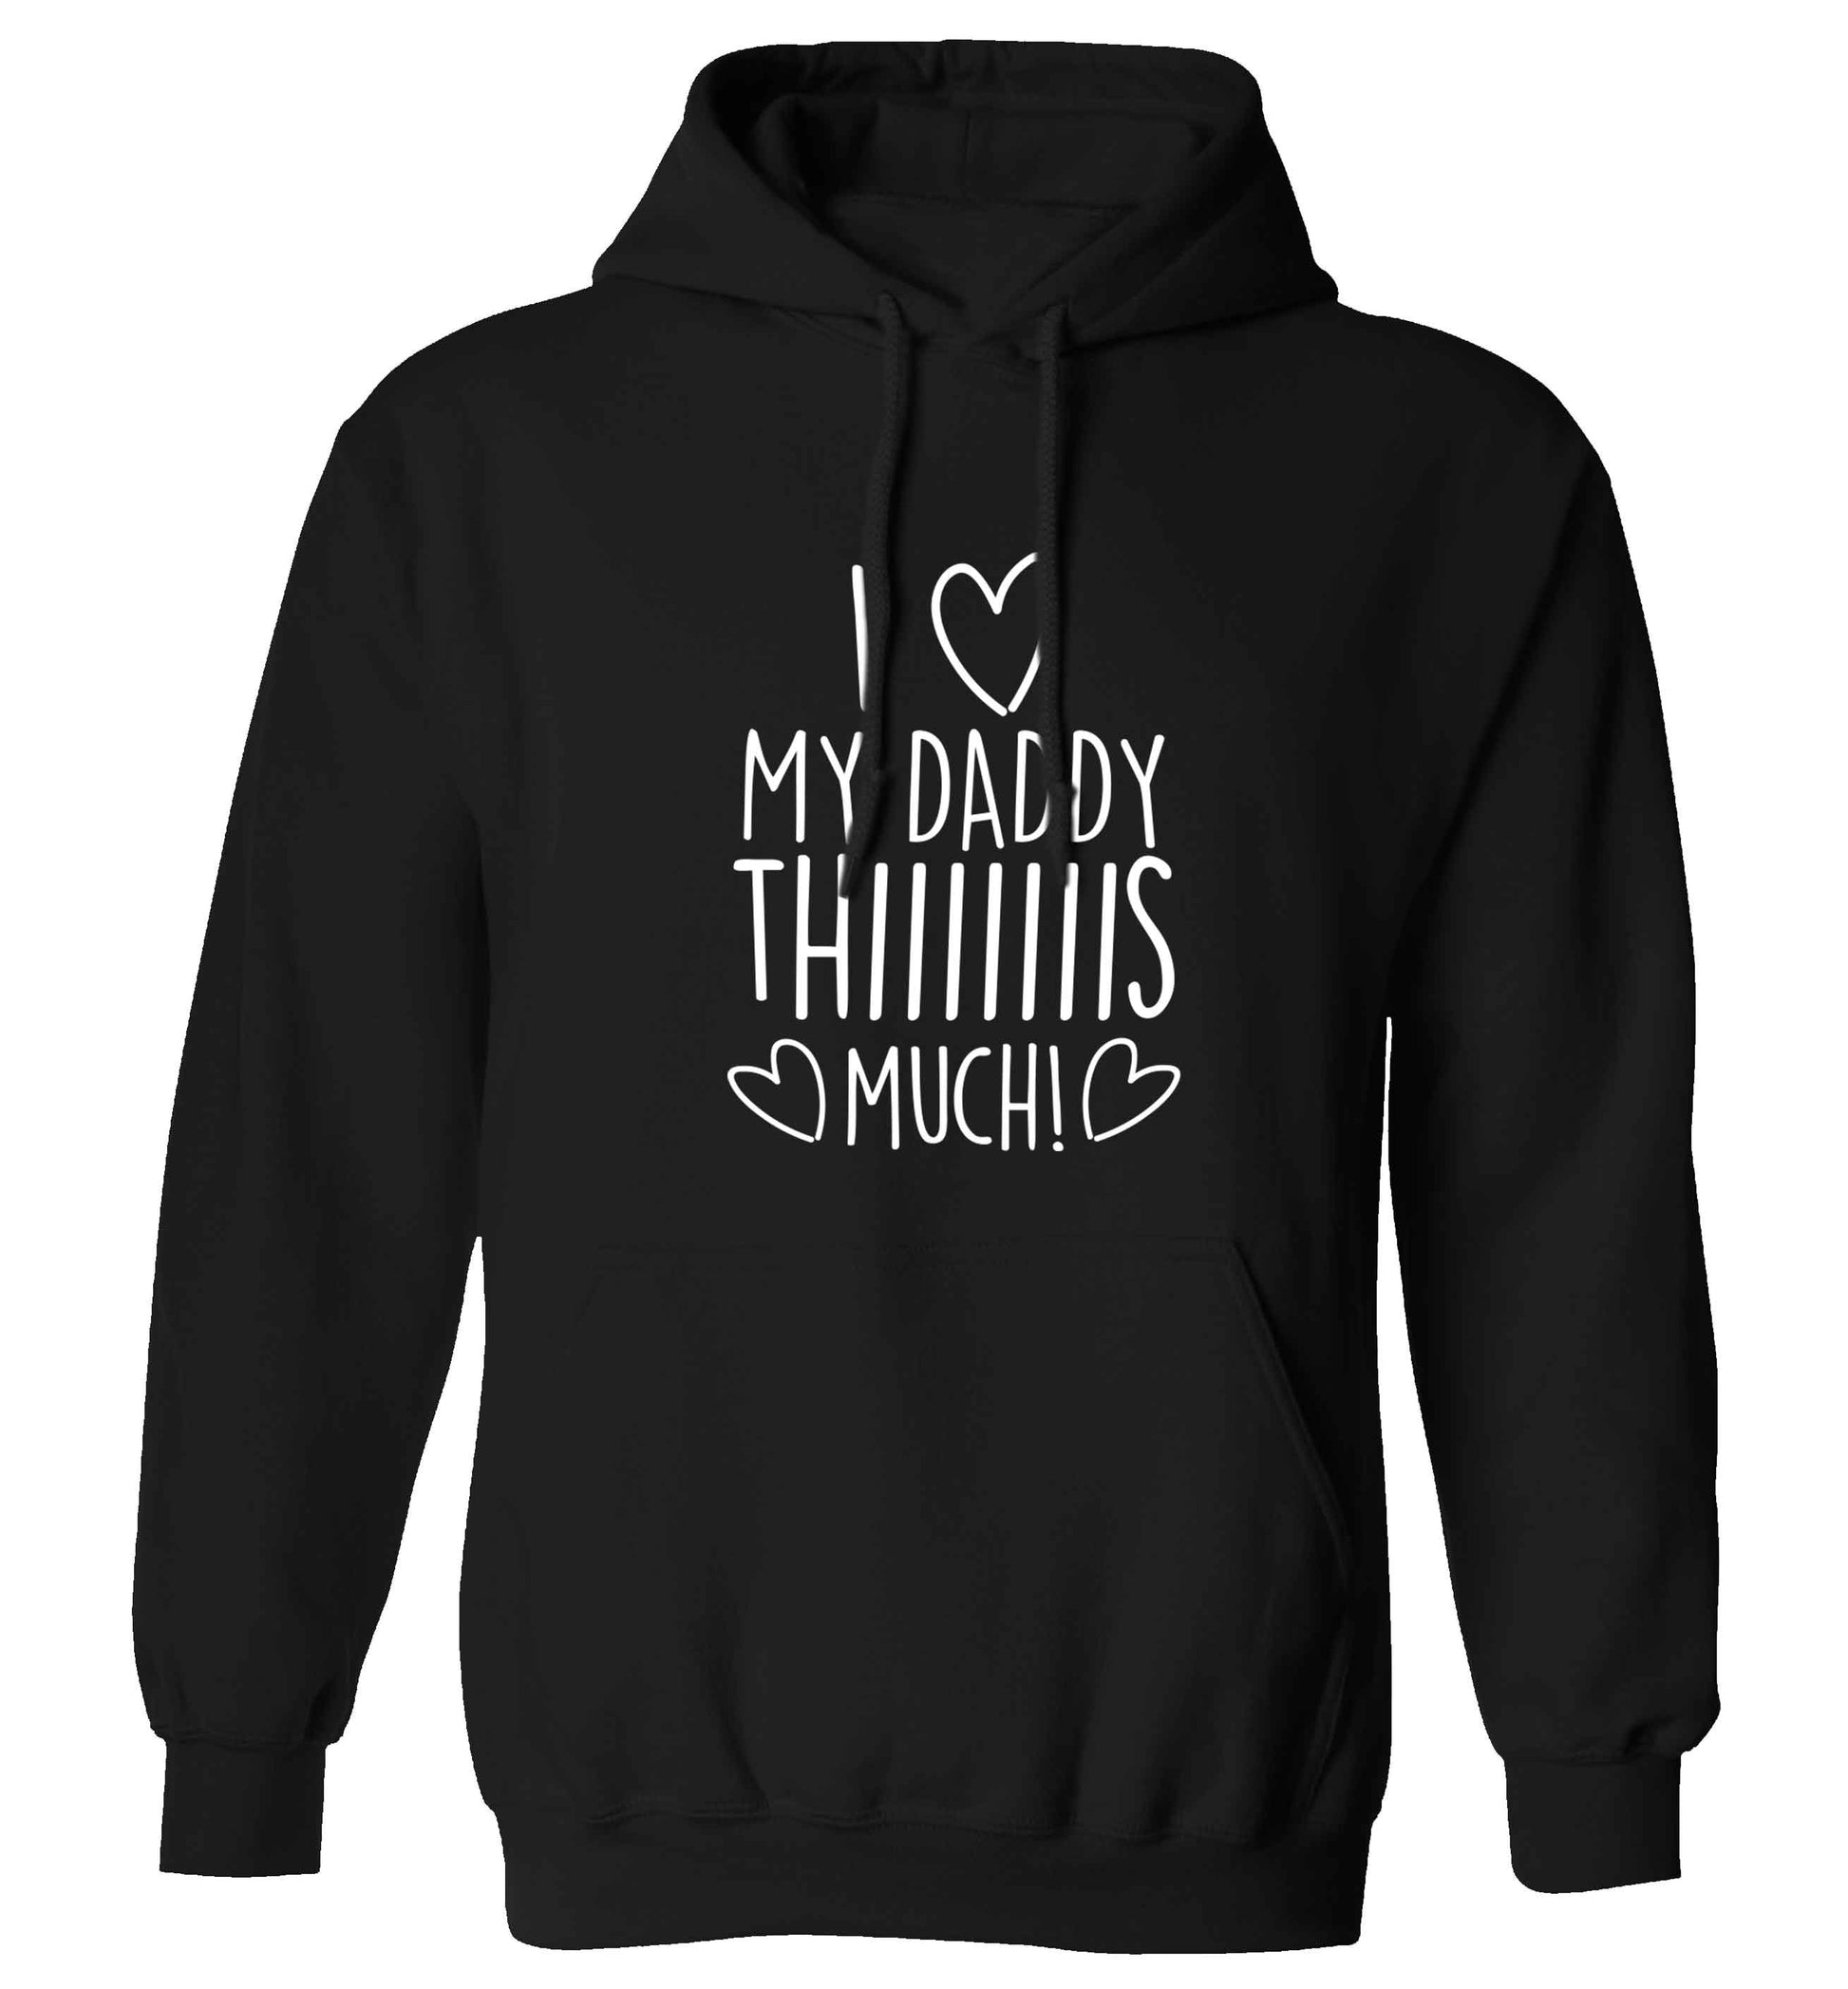 I love my daddy thiiiiis much! adults unisex black hoodie 2XL